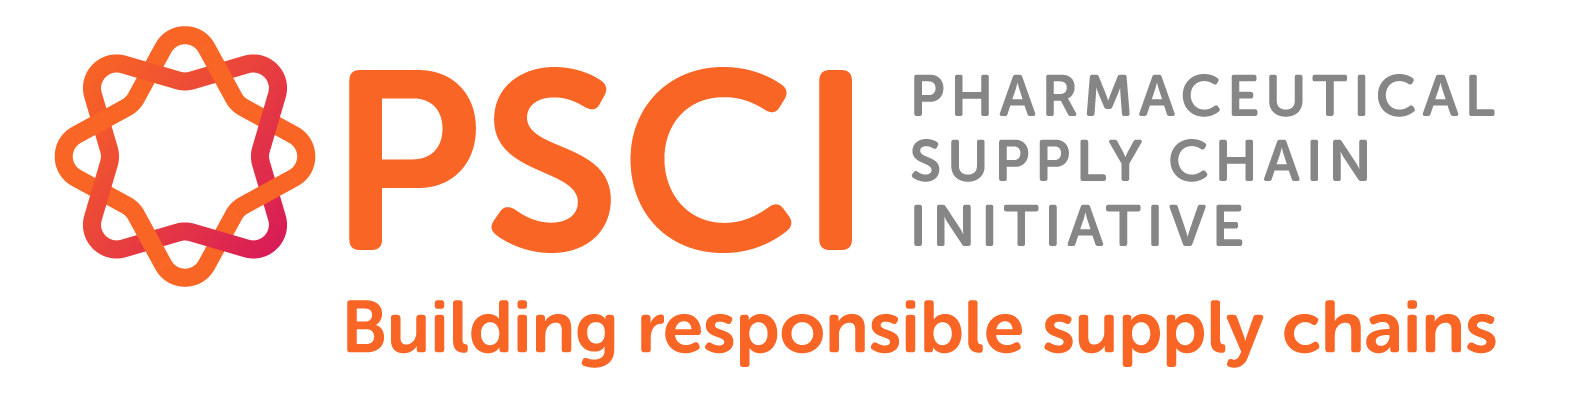 Pharmaceutical Supply Chain Initiative (PSCI) logo